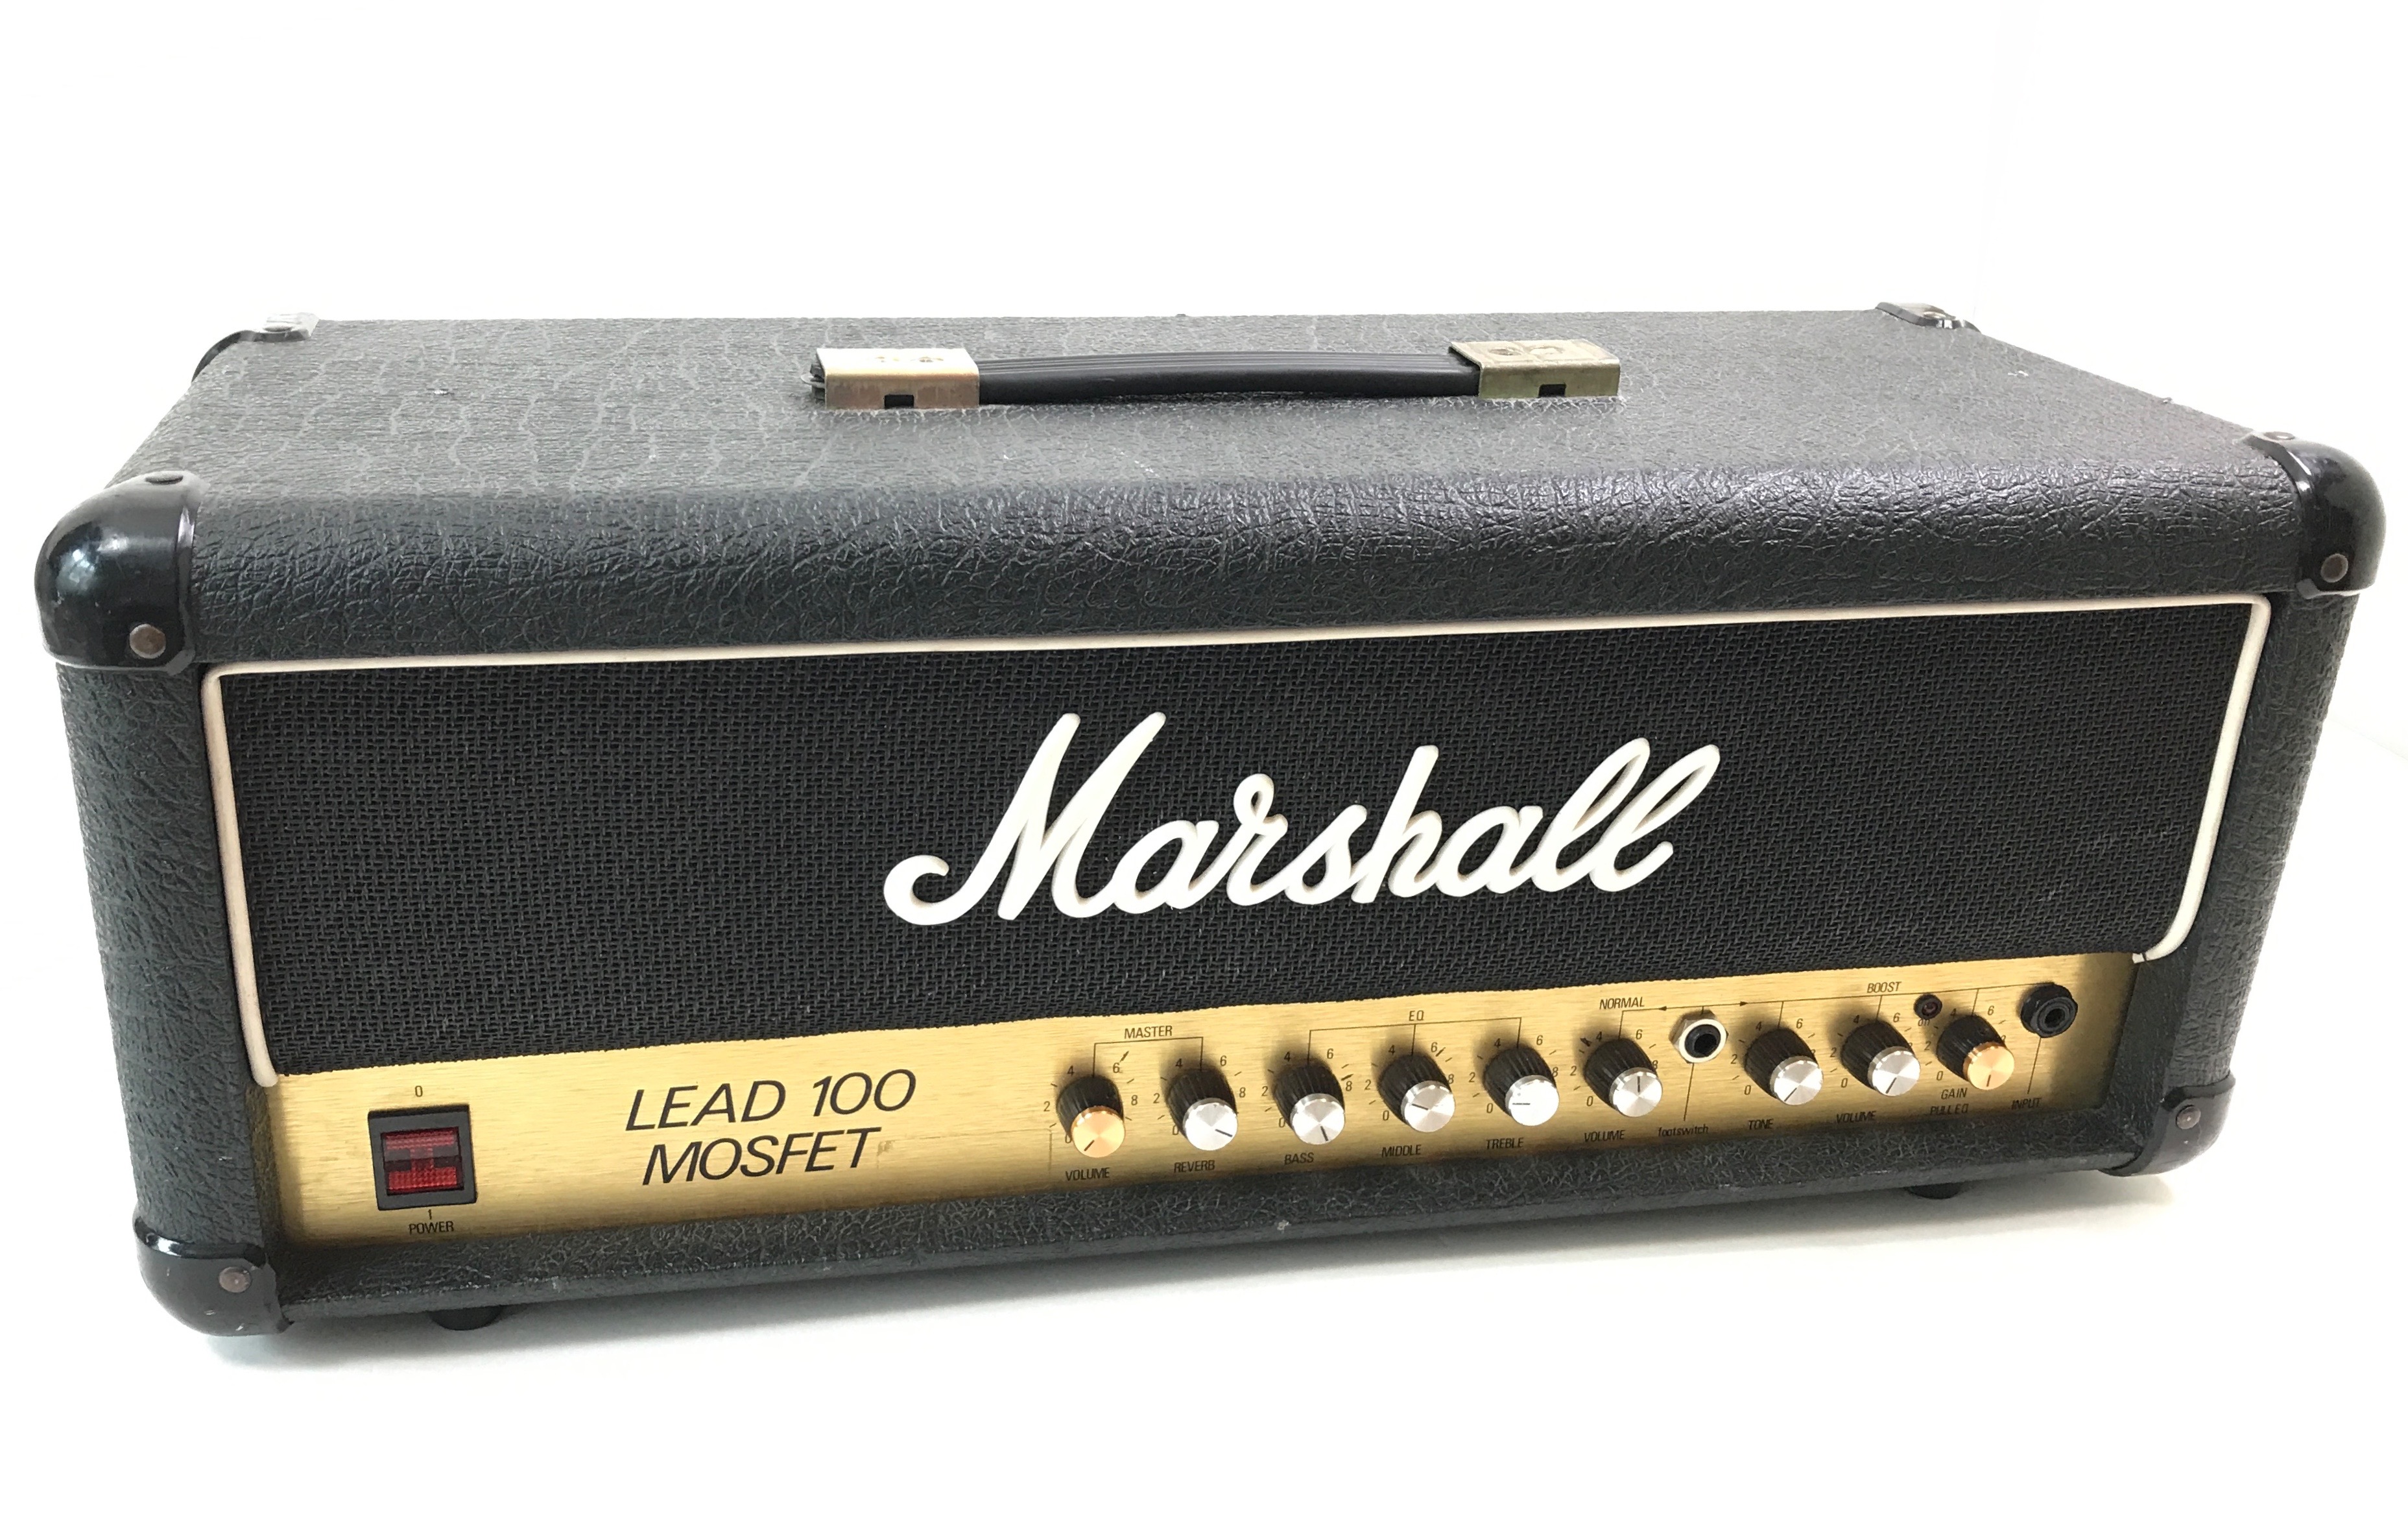 Marshall lead 100 mosfet 3210 manual